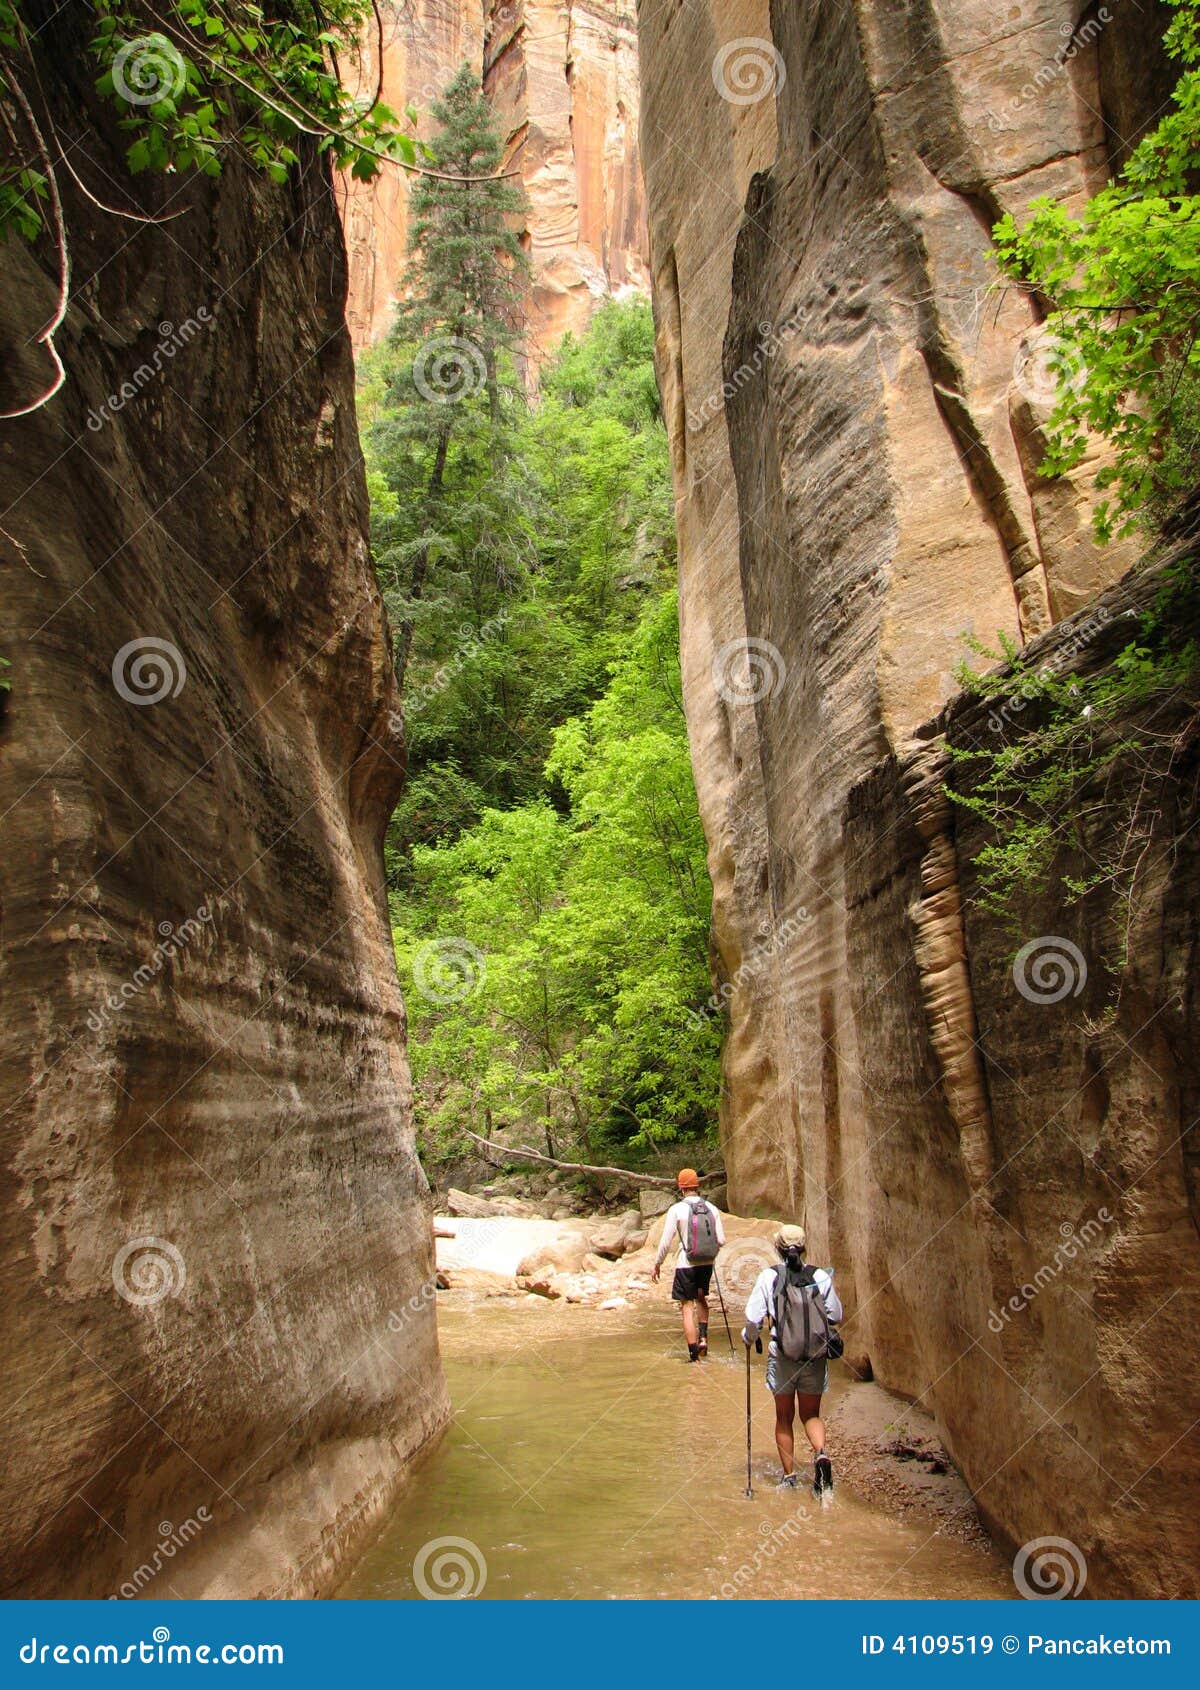 zion virgin narrows hikers